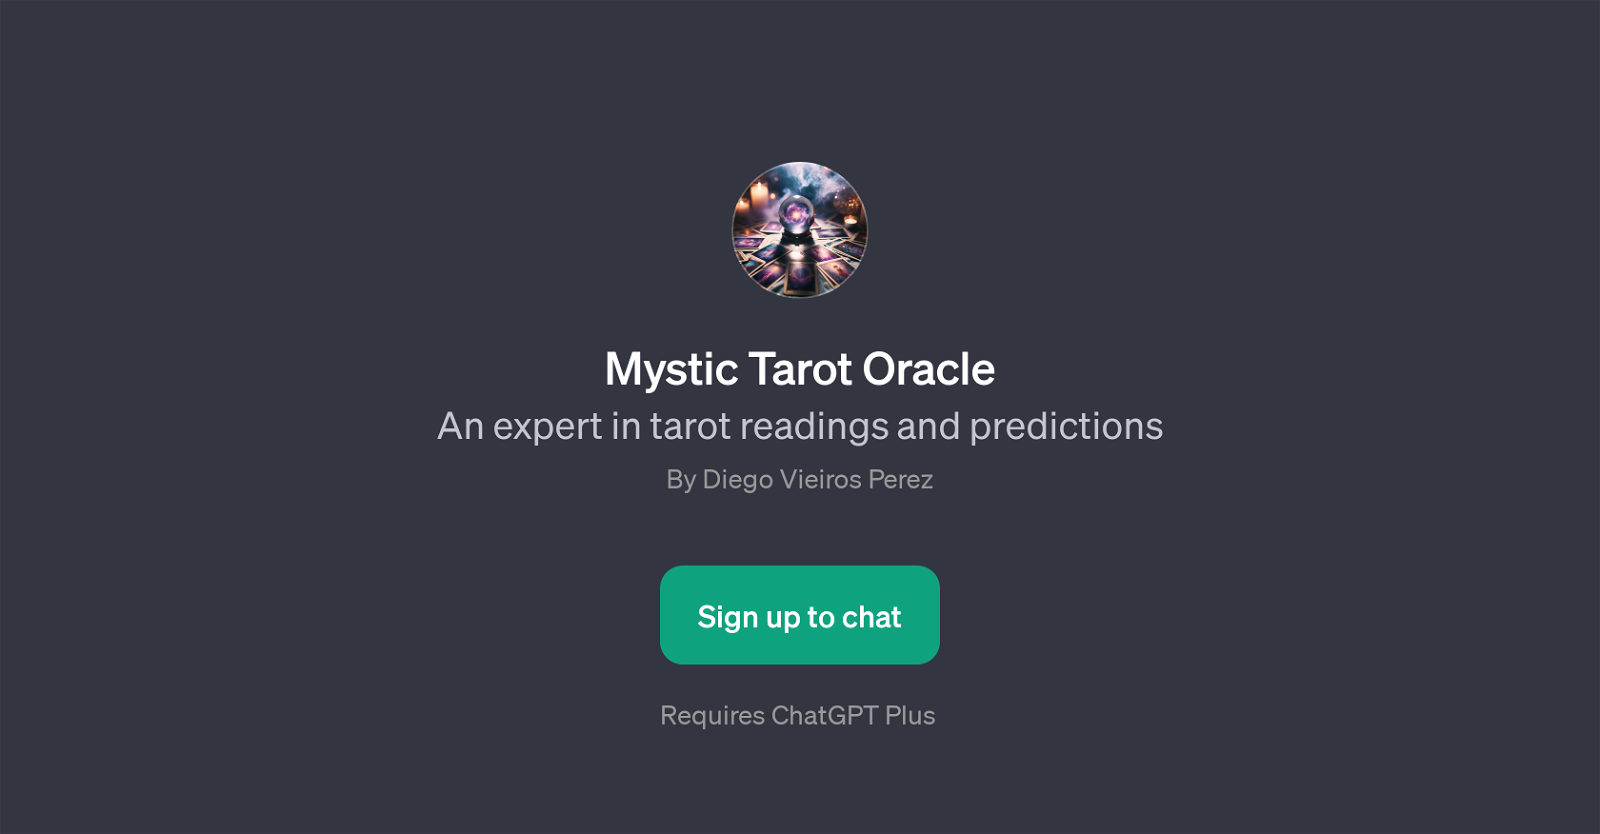 Mystic Tarot Oracle website